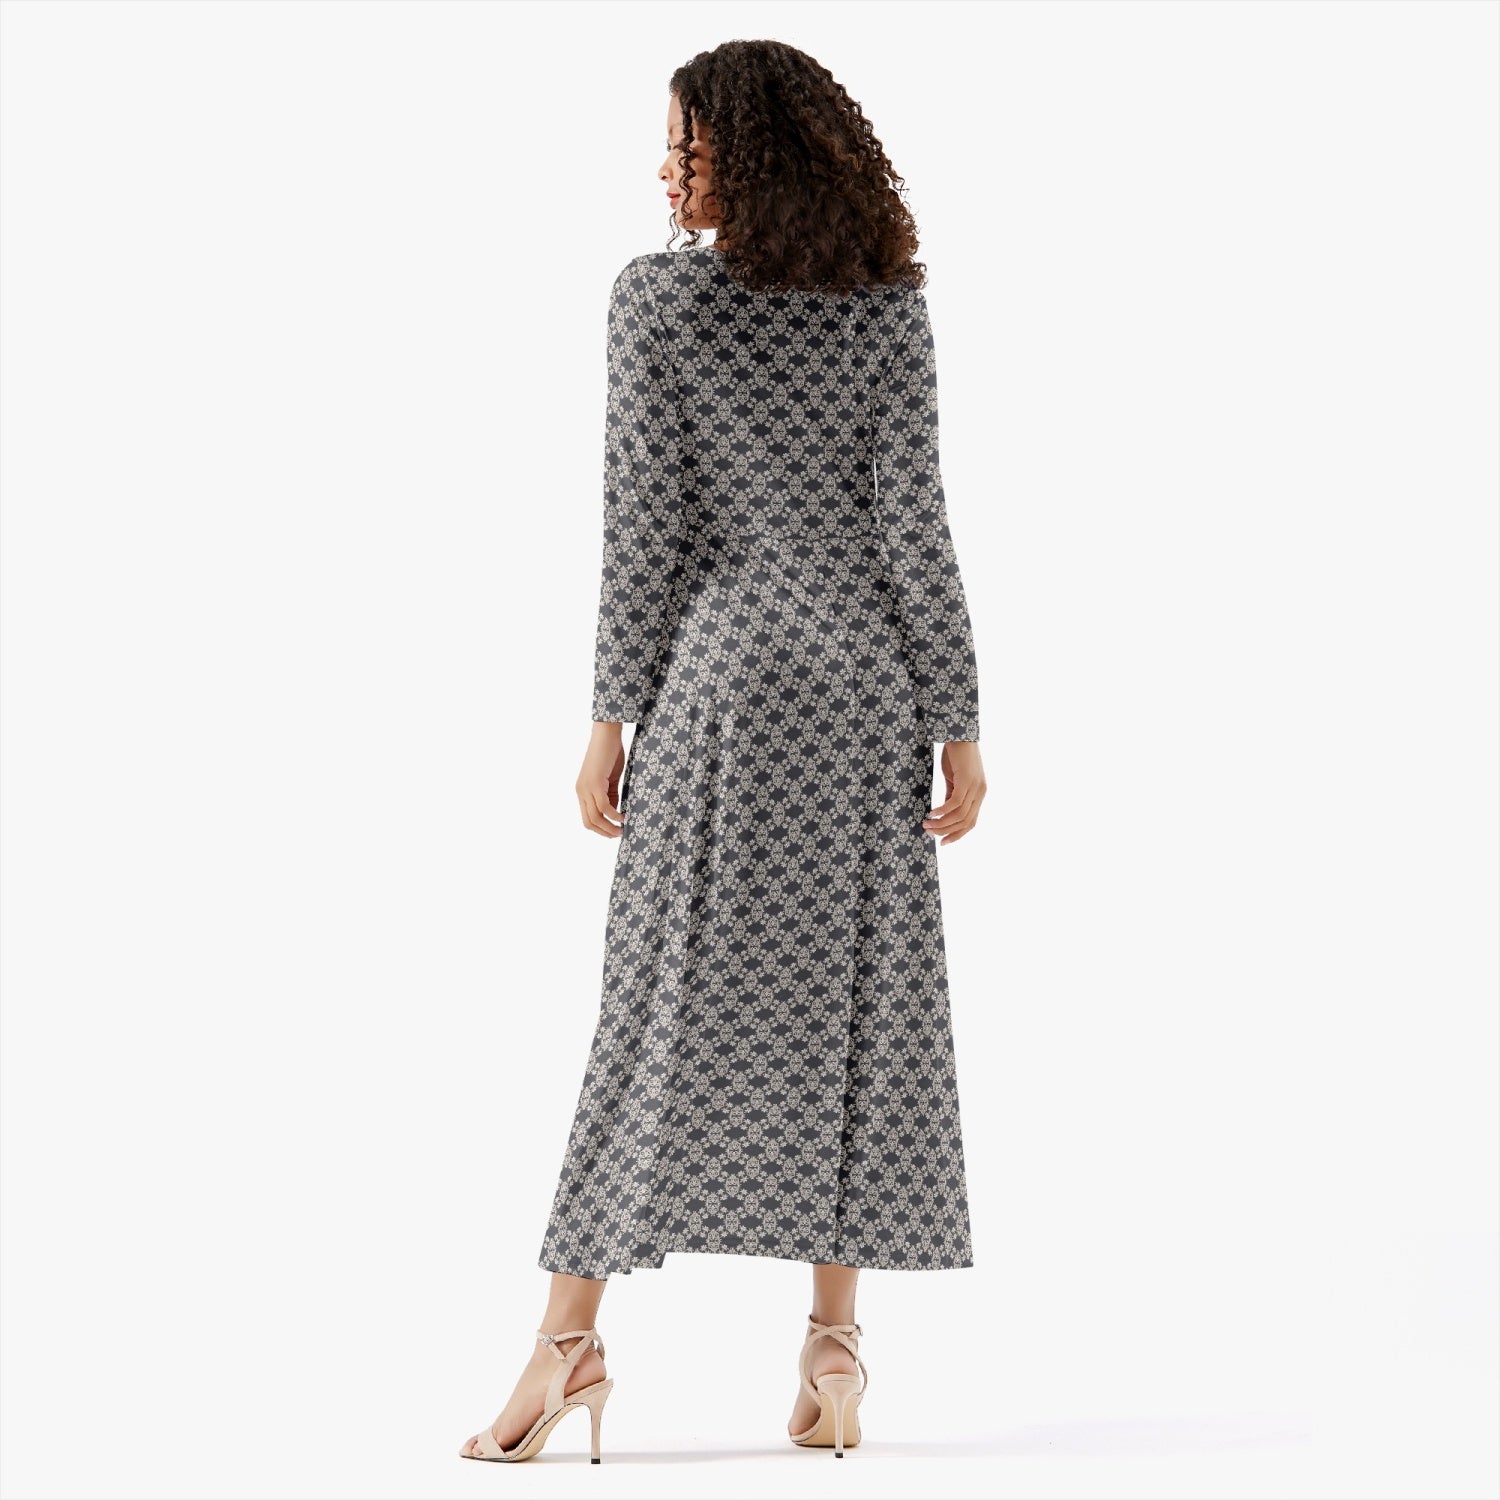 White on Black stylisch autumn 2022 Women's Long-Sleeve One-piece Dress, by Sensus Studio Design